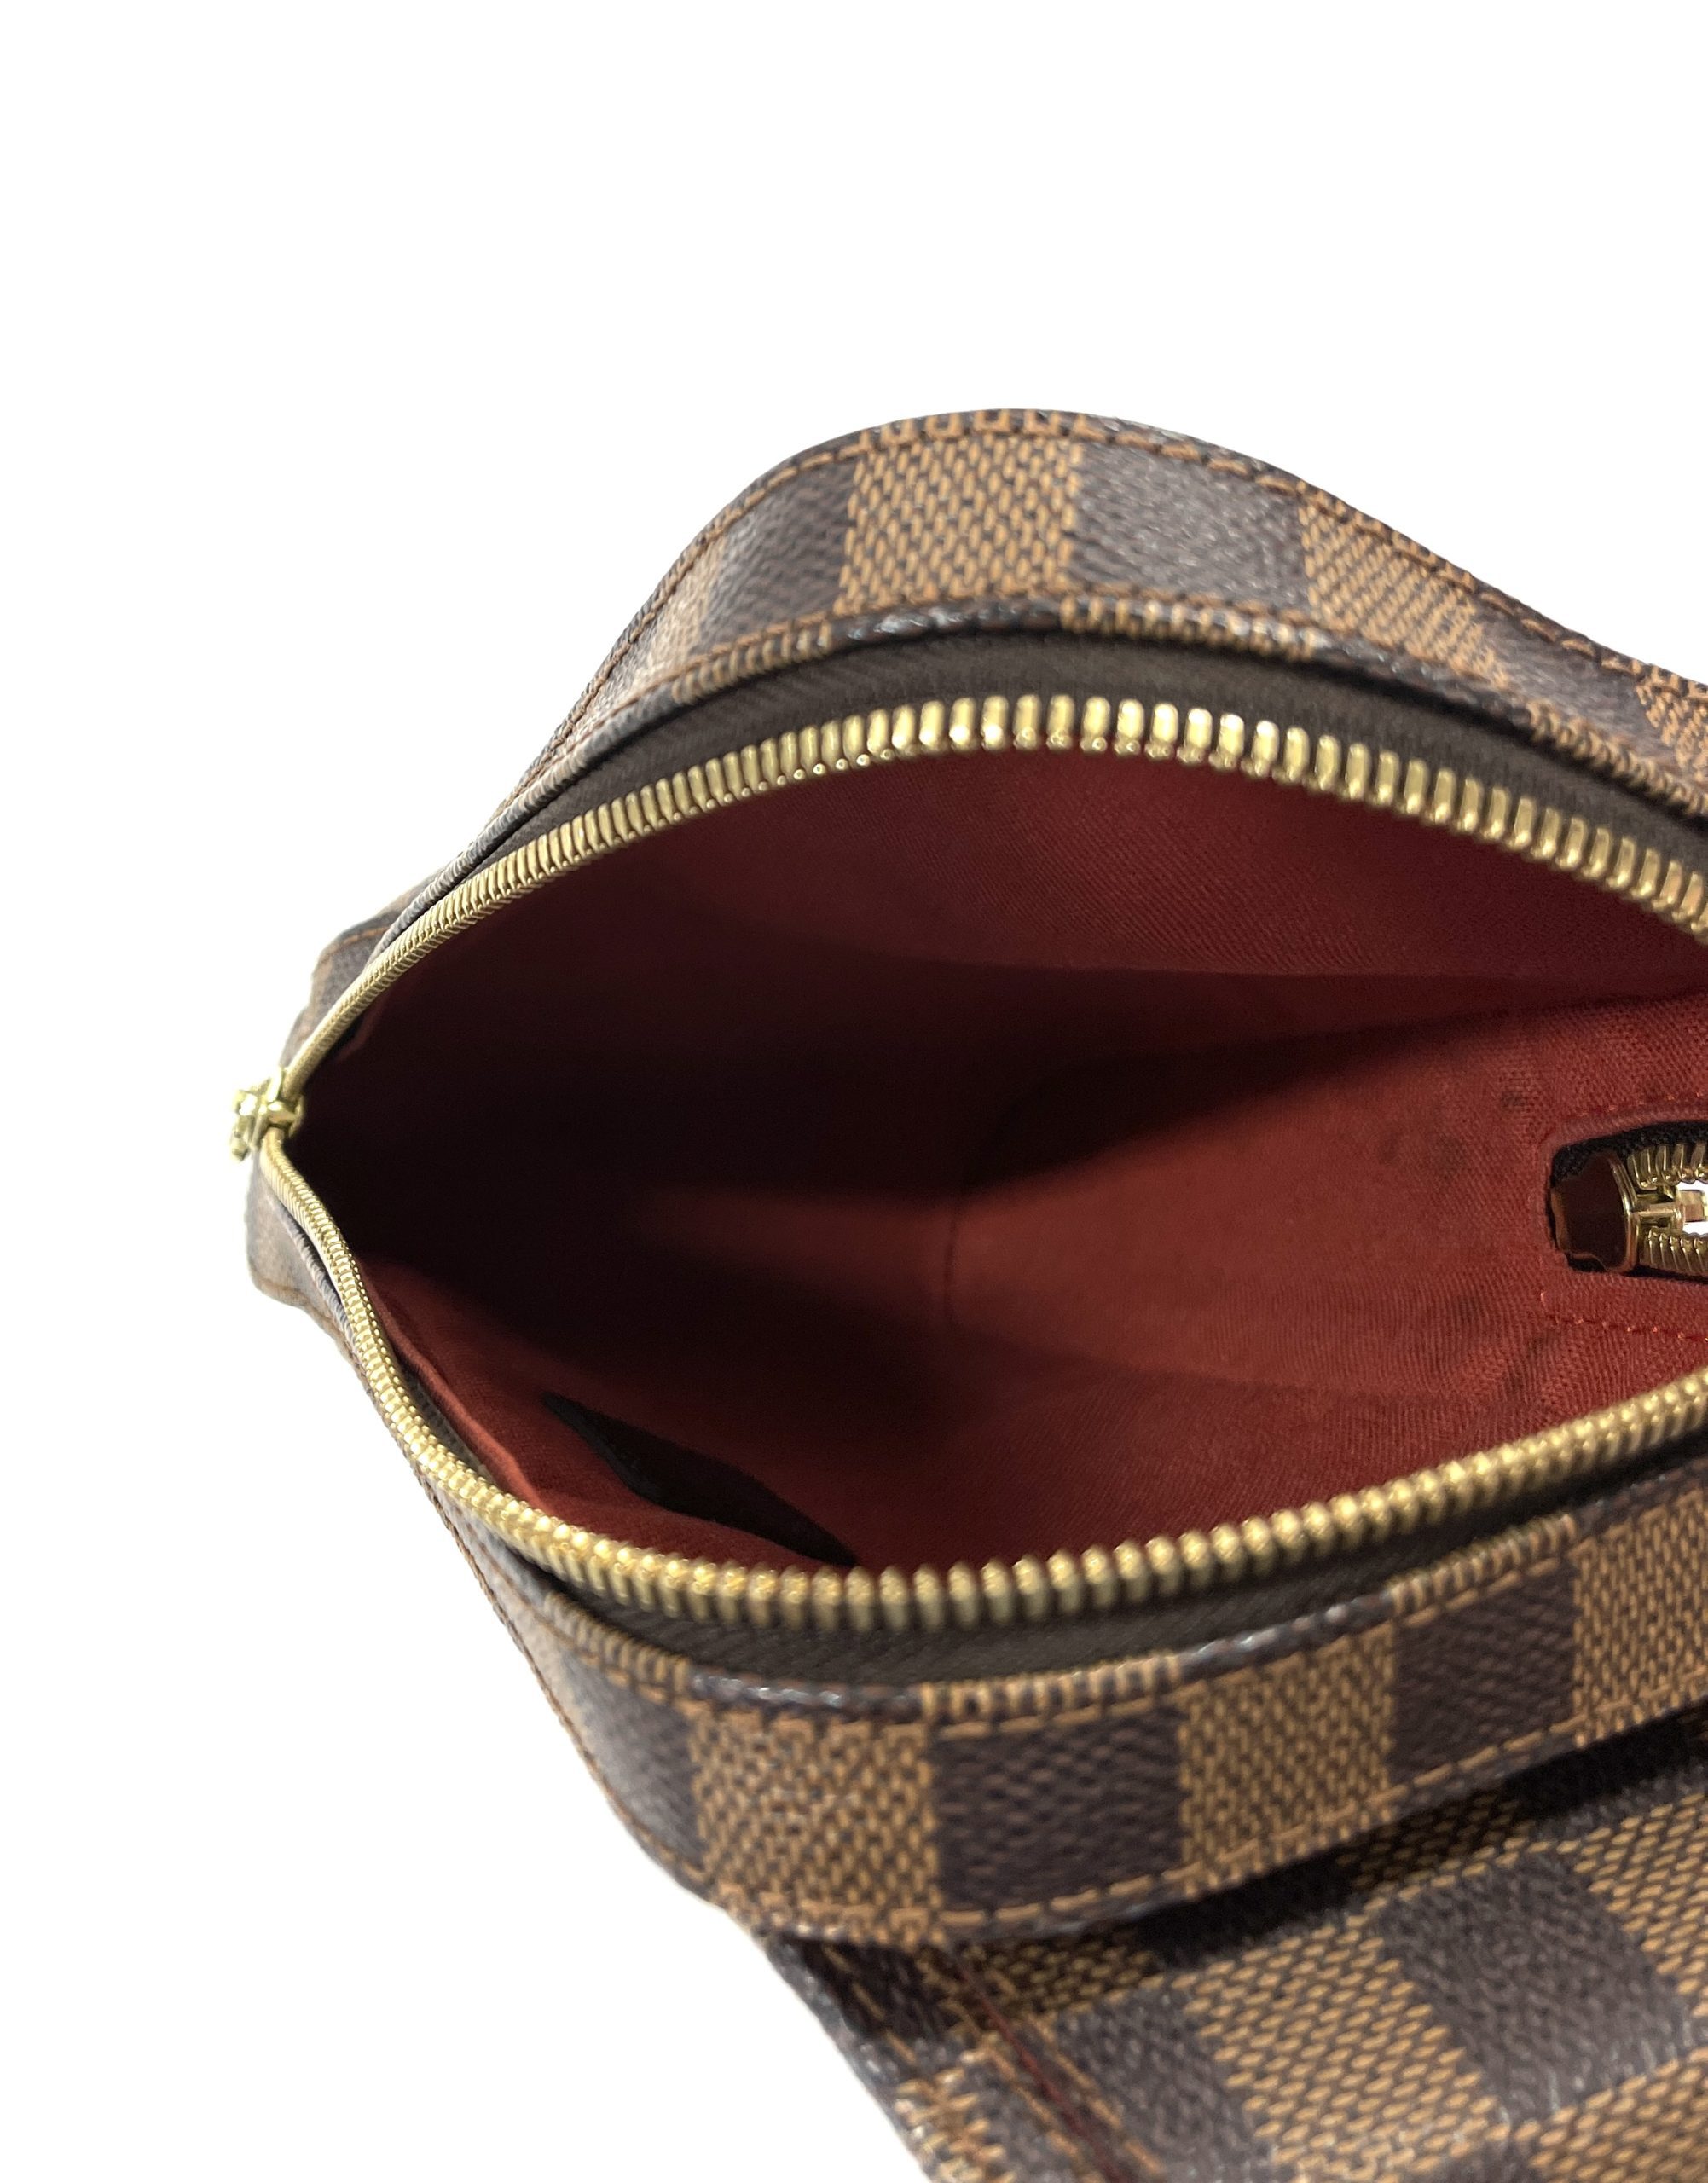 Louis Vuitton Damier Ebene Geronimos Bum Body Bag Fanny Pack Waist Pouch 1230lv47